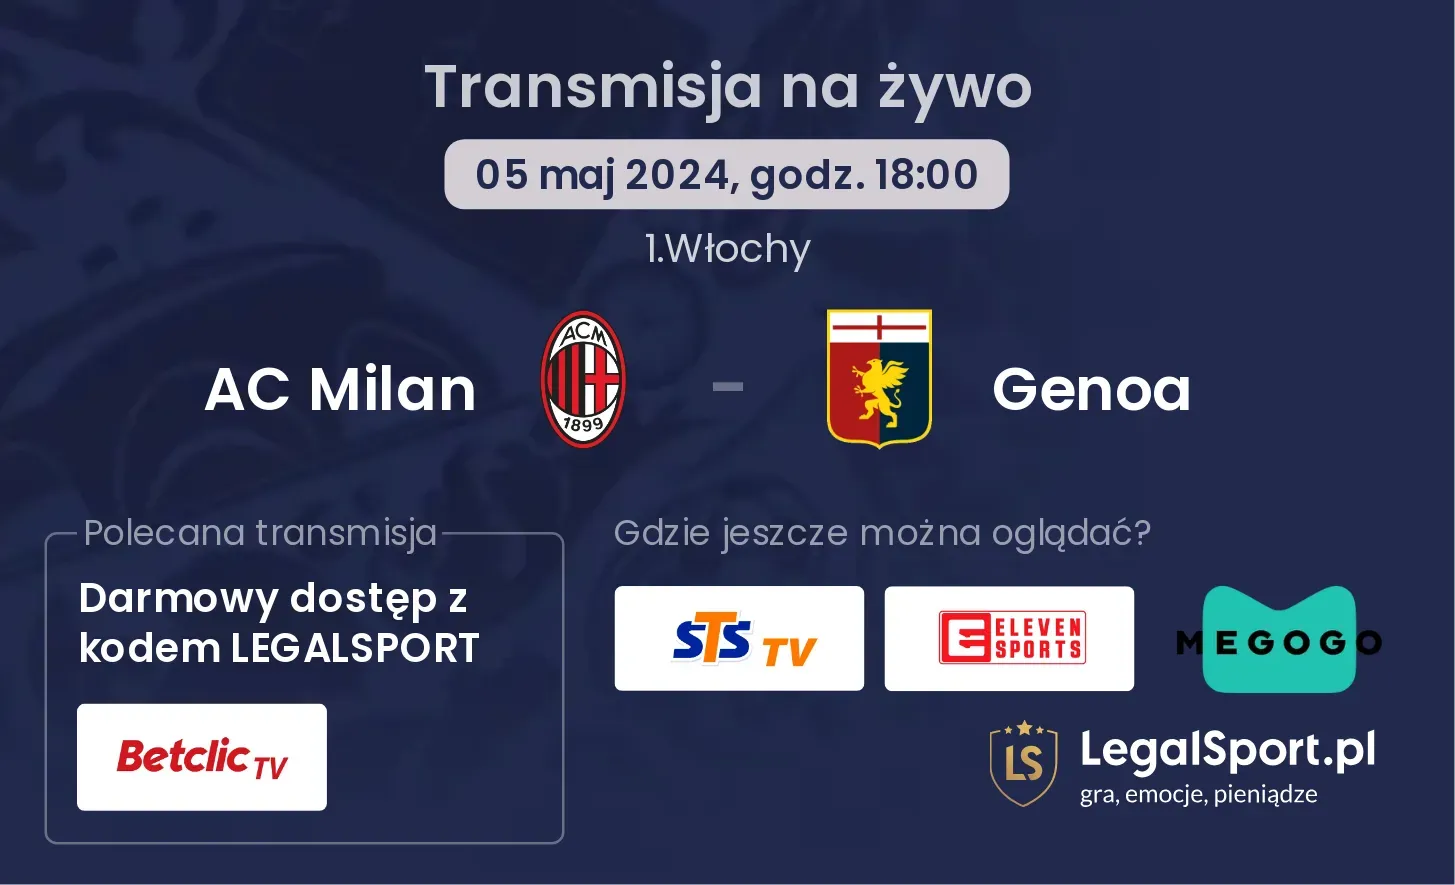 AC Milan - Genoa transmisja na żywo